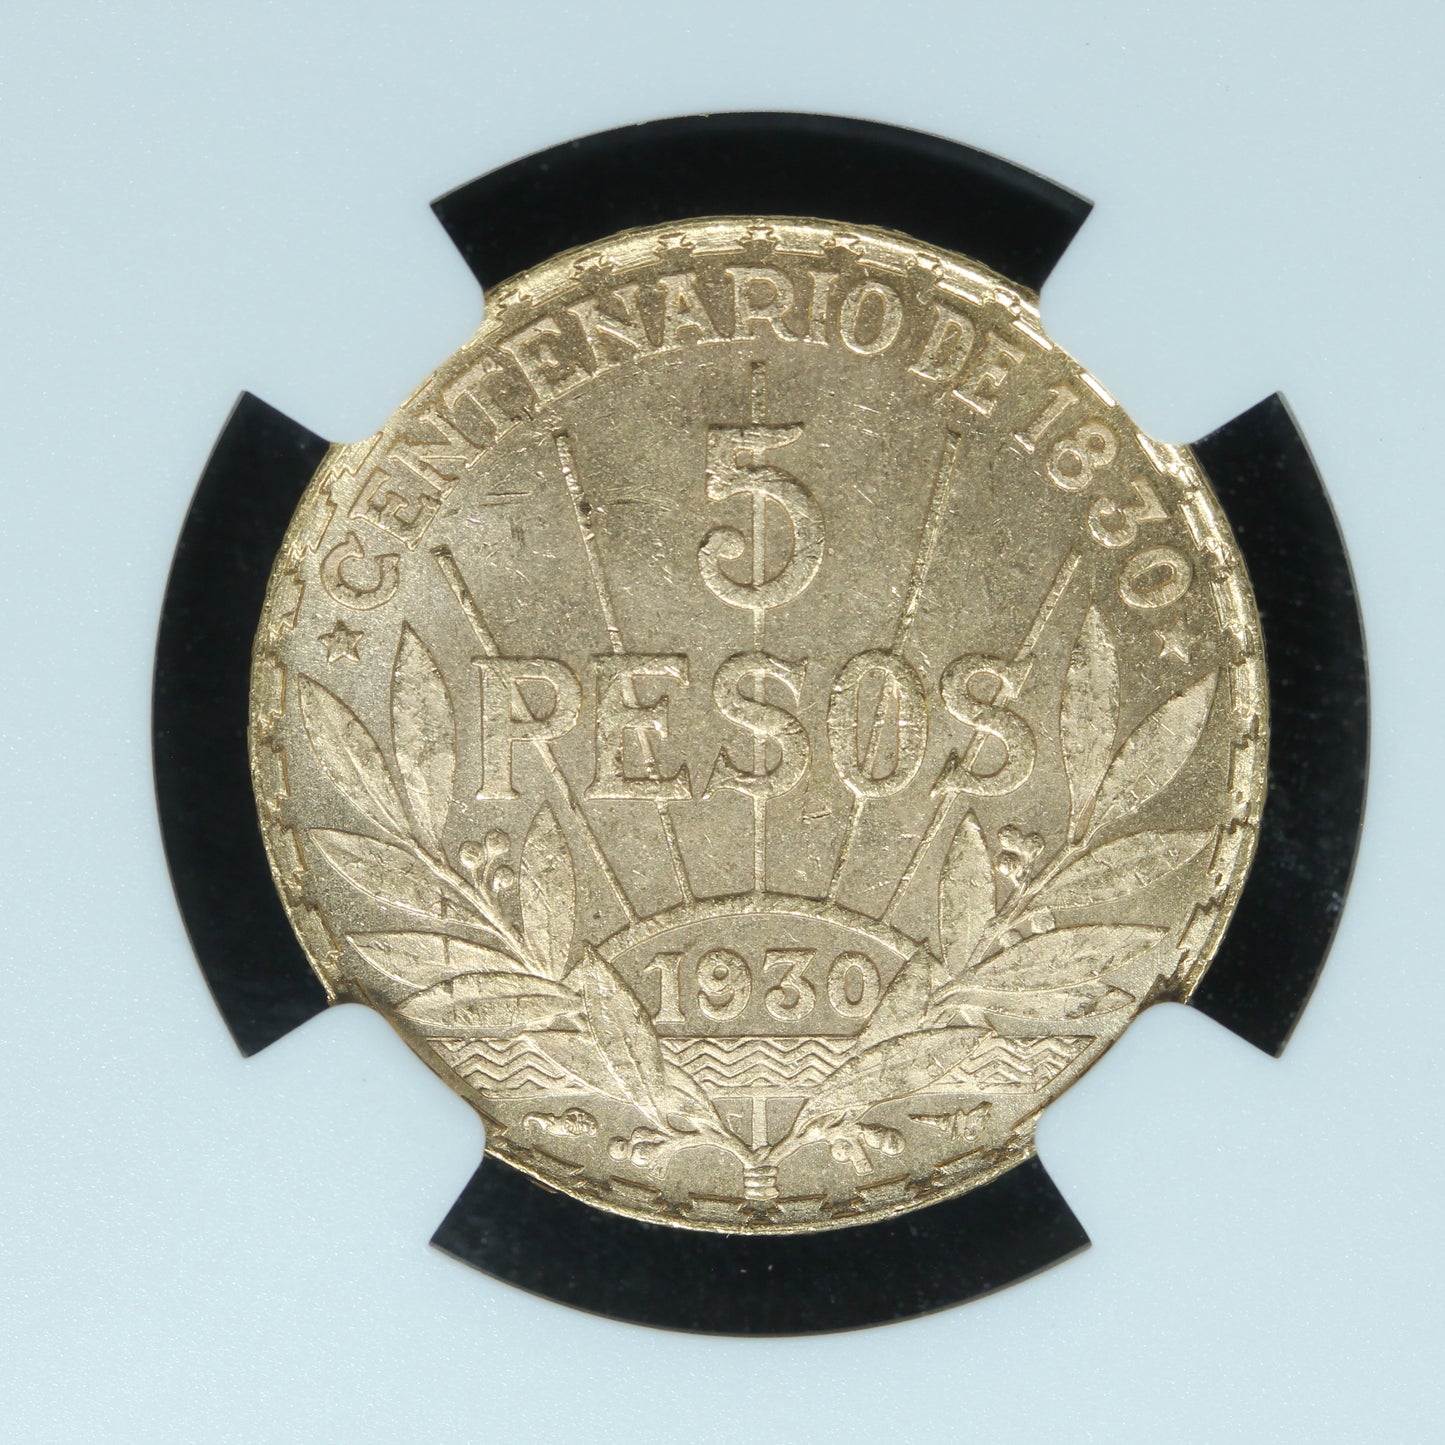 1930 Uruguay 5 Peso Gold Coin - NGC MS 63